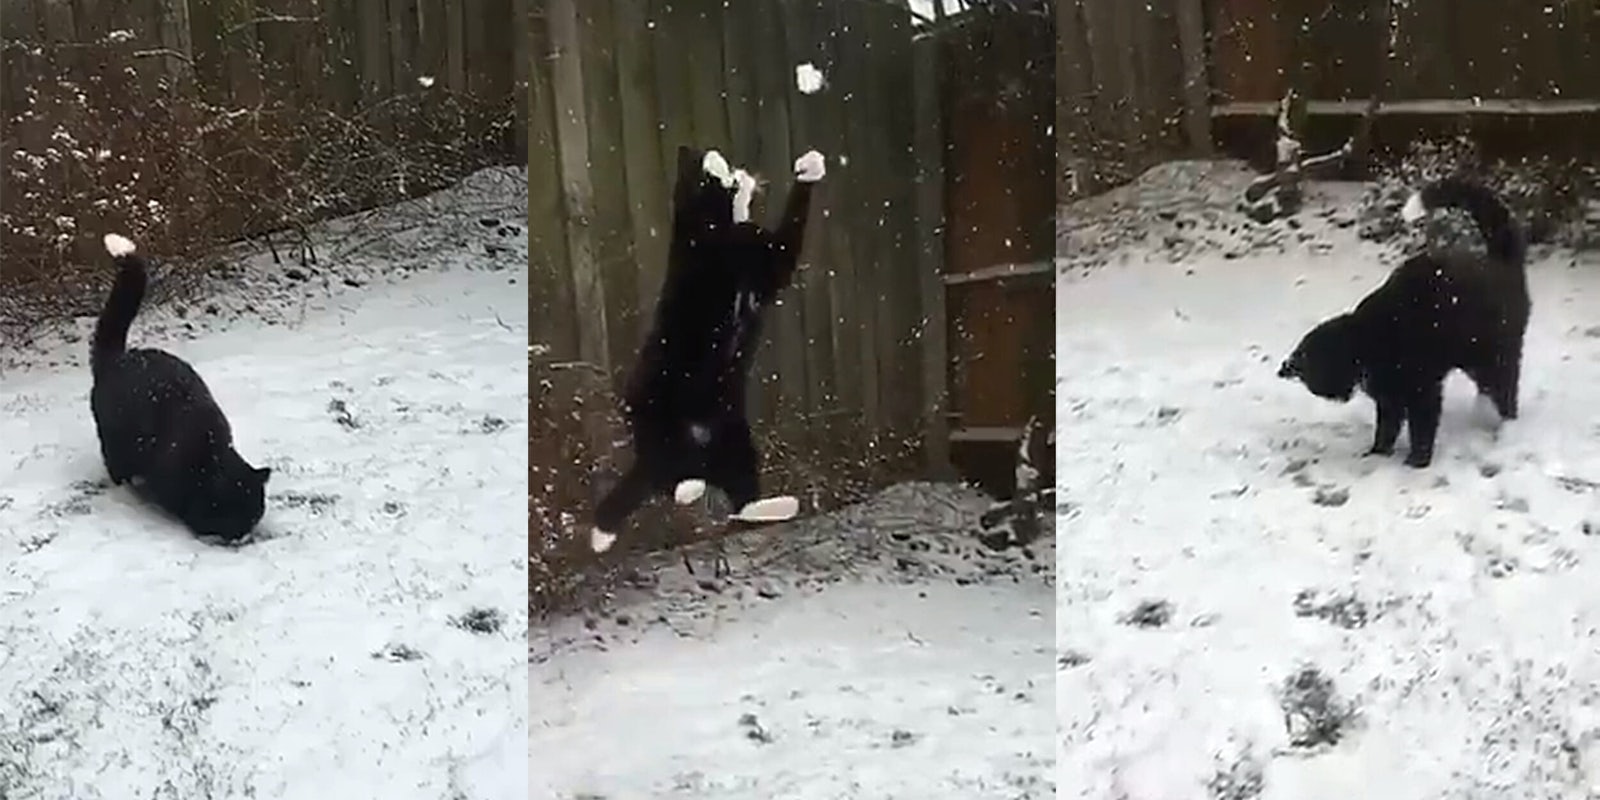 Cat catching snowballs in Twitter video.